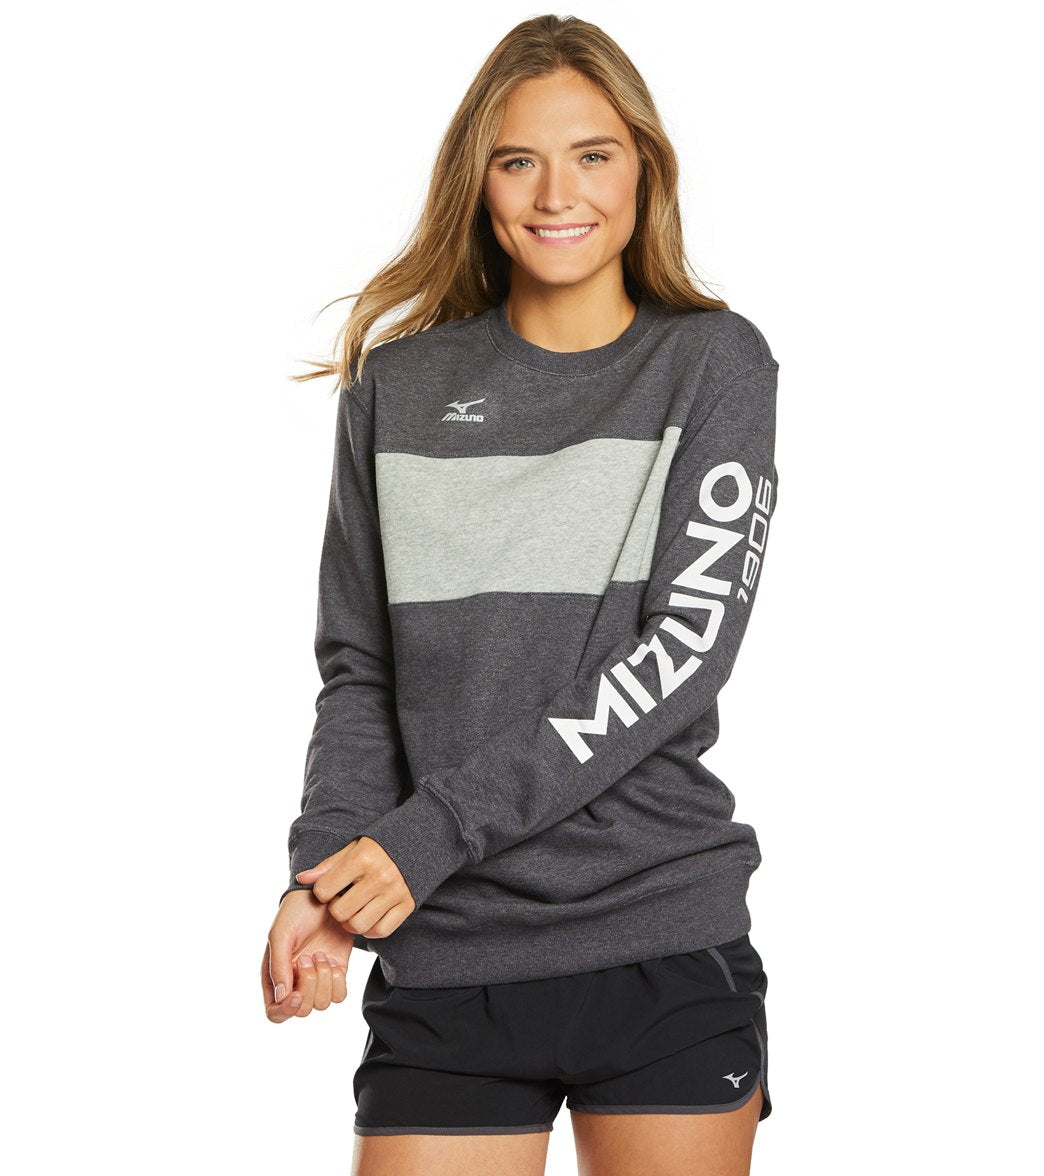 Mizuno Women's Retro Crew Volleyball Sweatshirt - Heathered Charcoal/Grey/Charcoal Small Cotton/Spandex - Swimoutlet.com